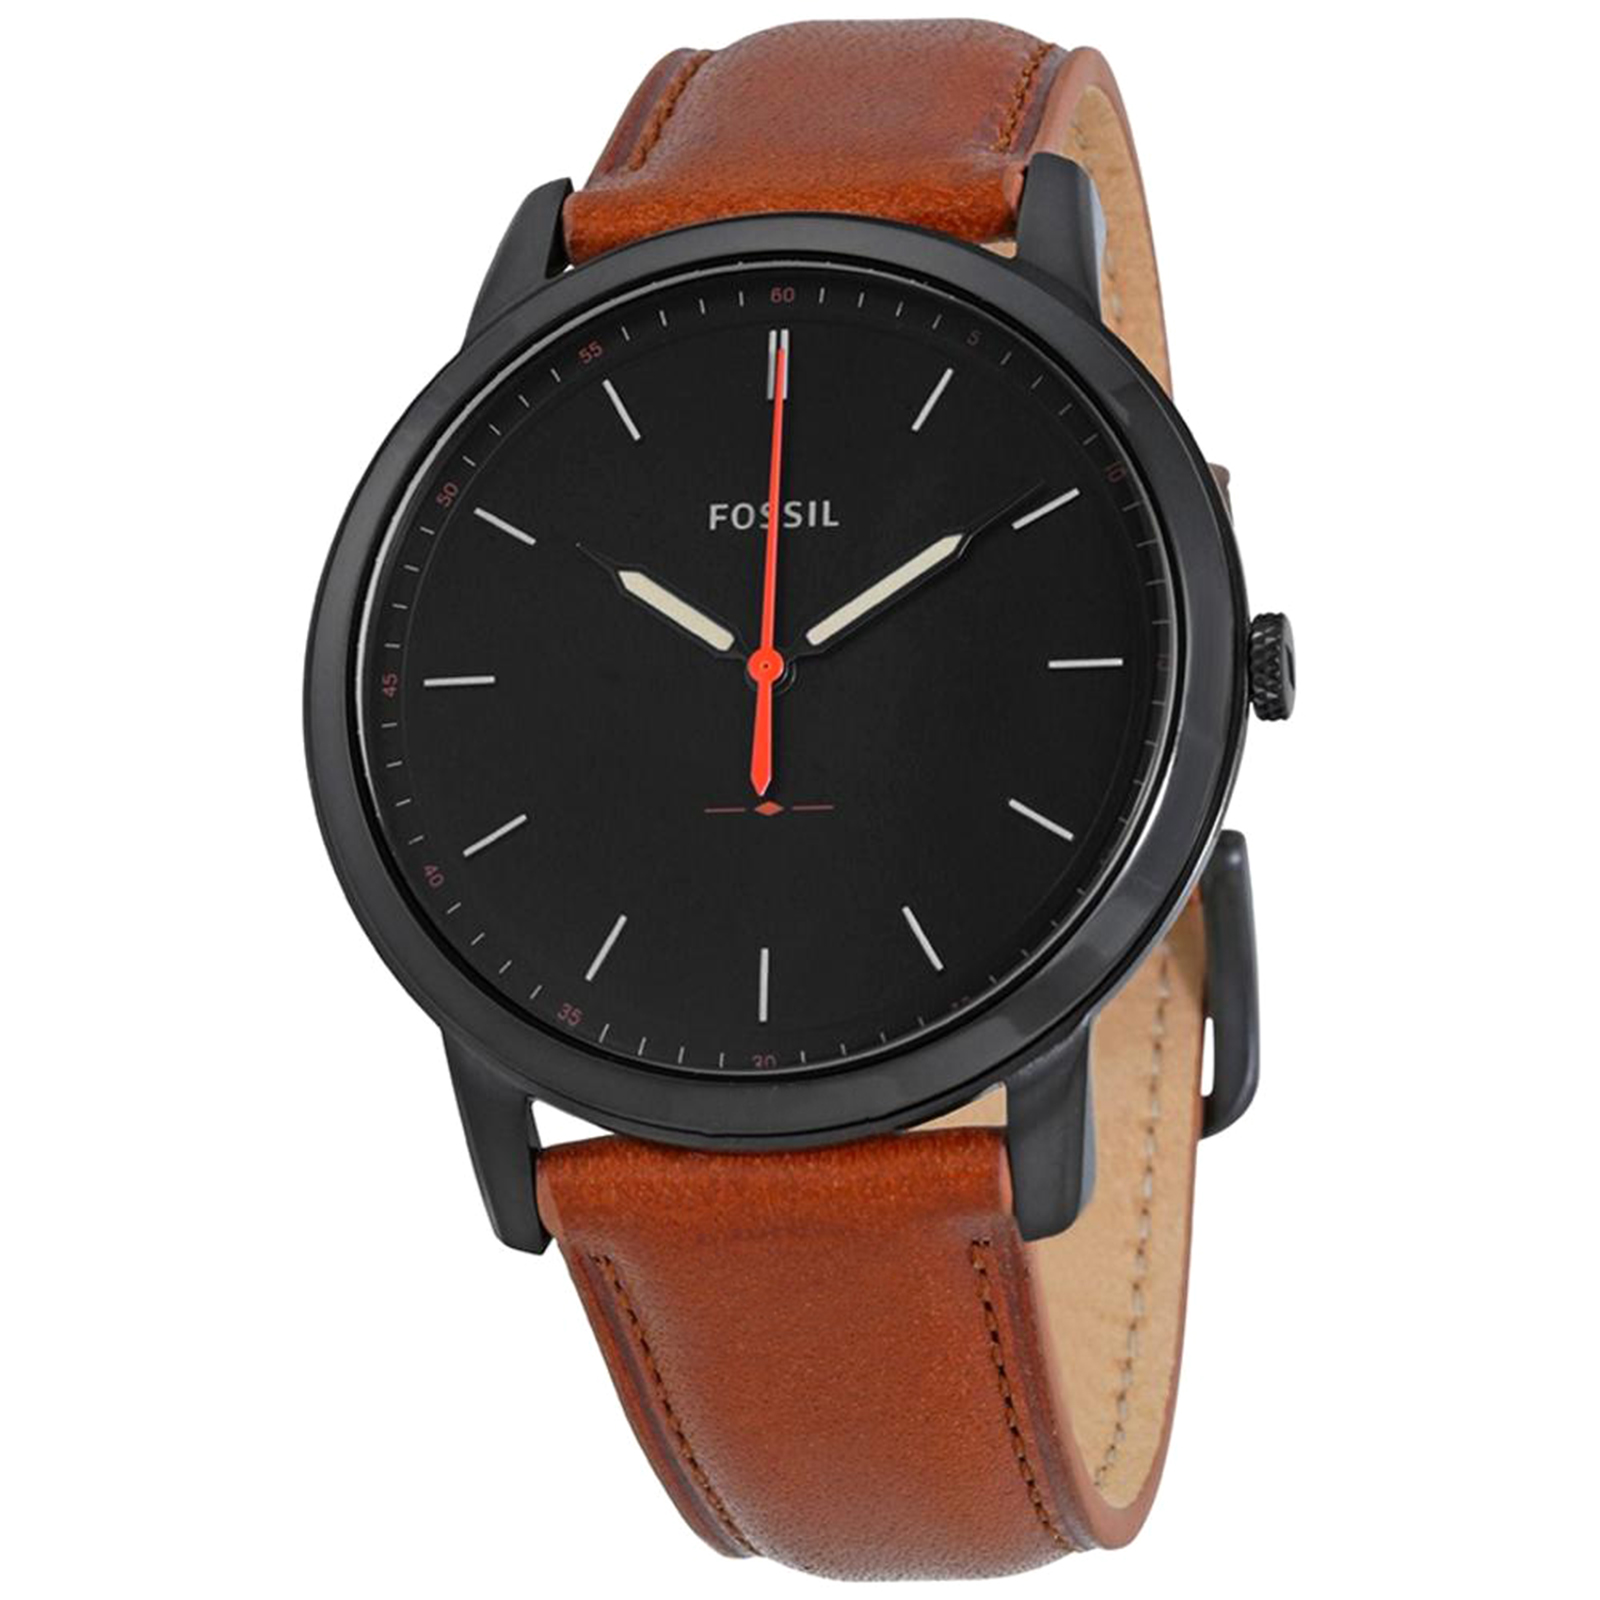 Fossil FS5305 Men's Minimalist Leather Strap Watch - Brown